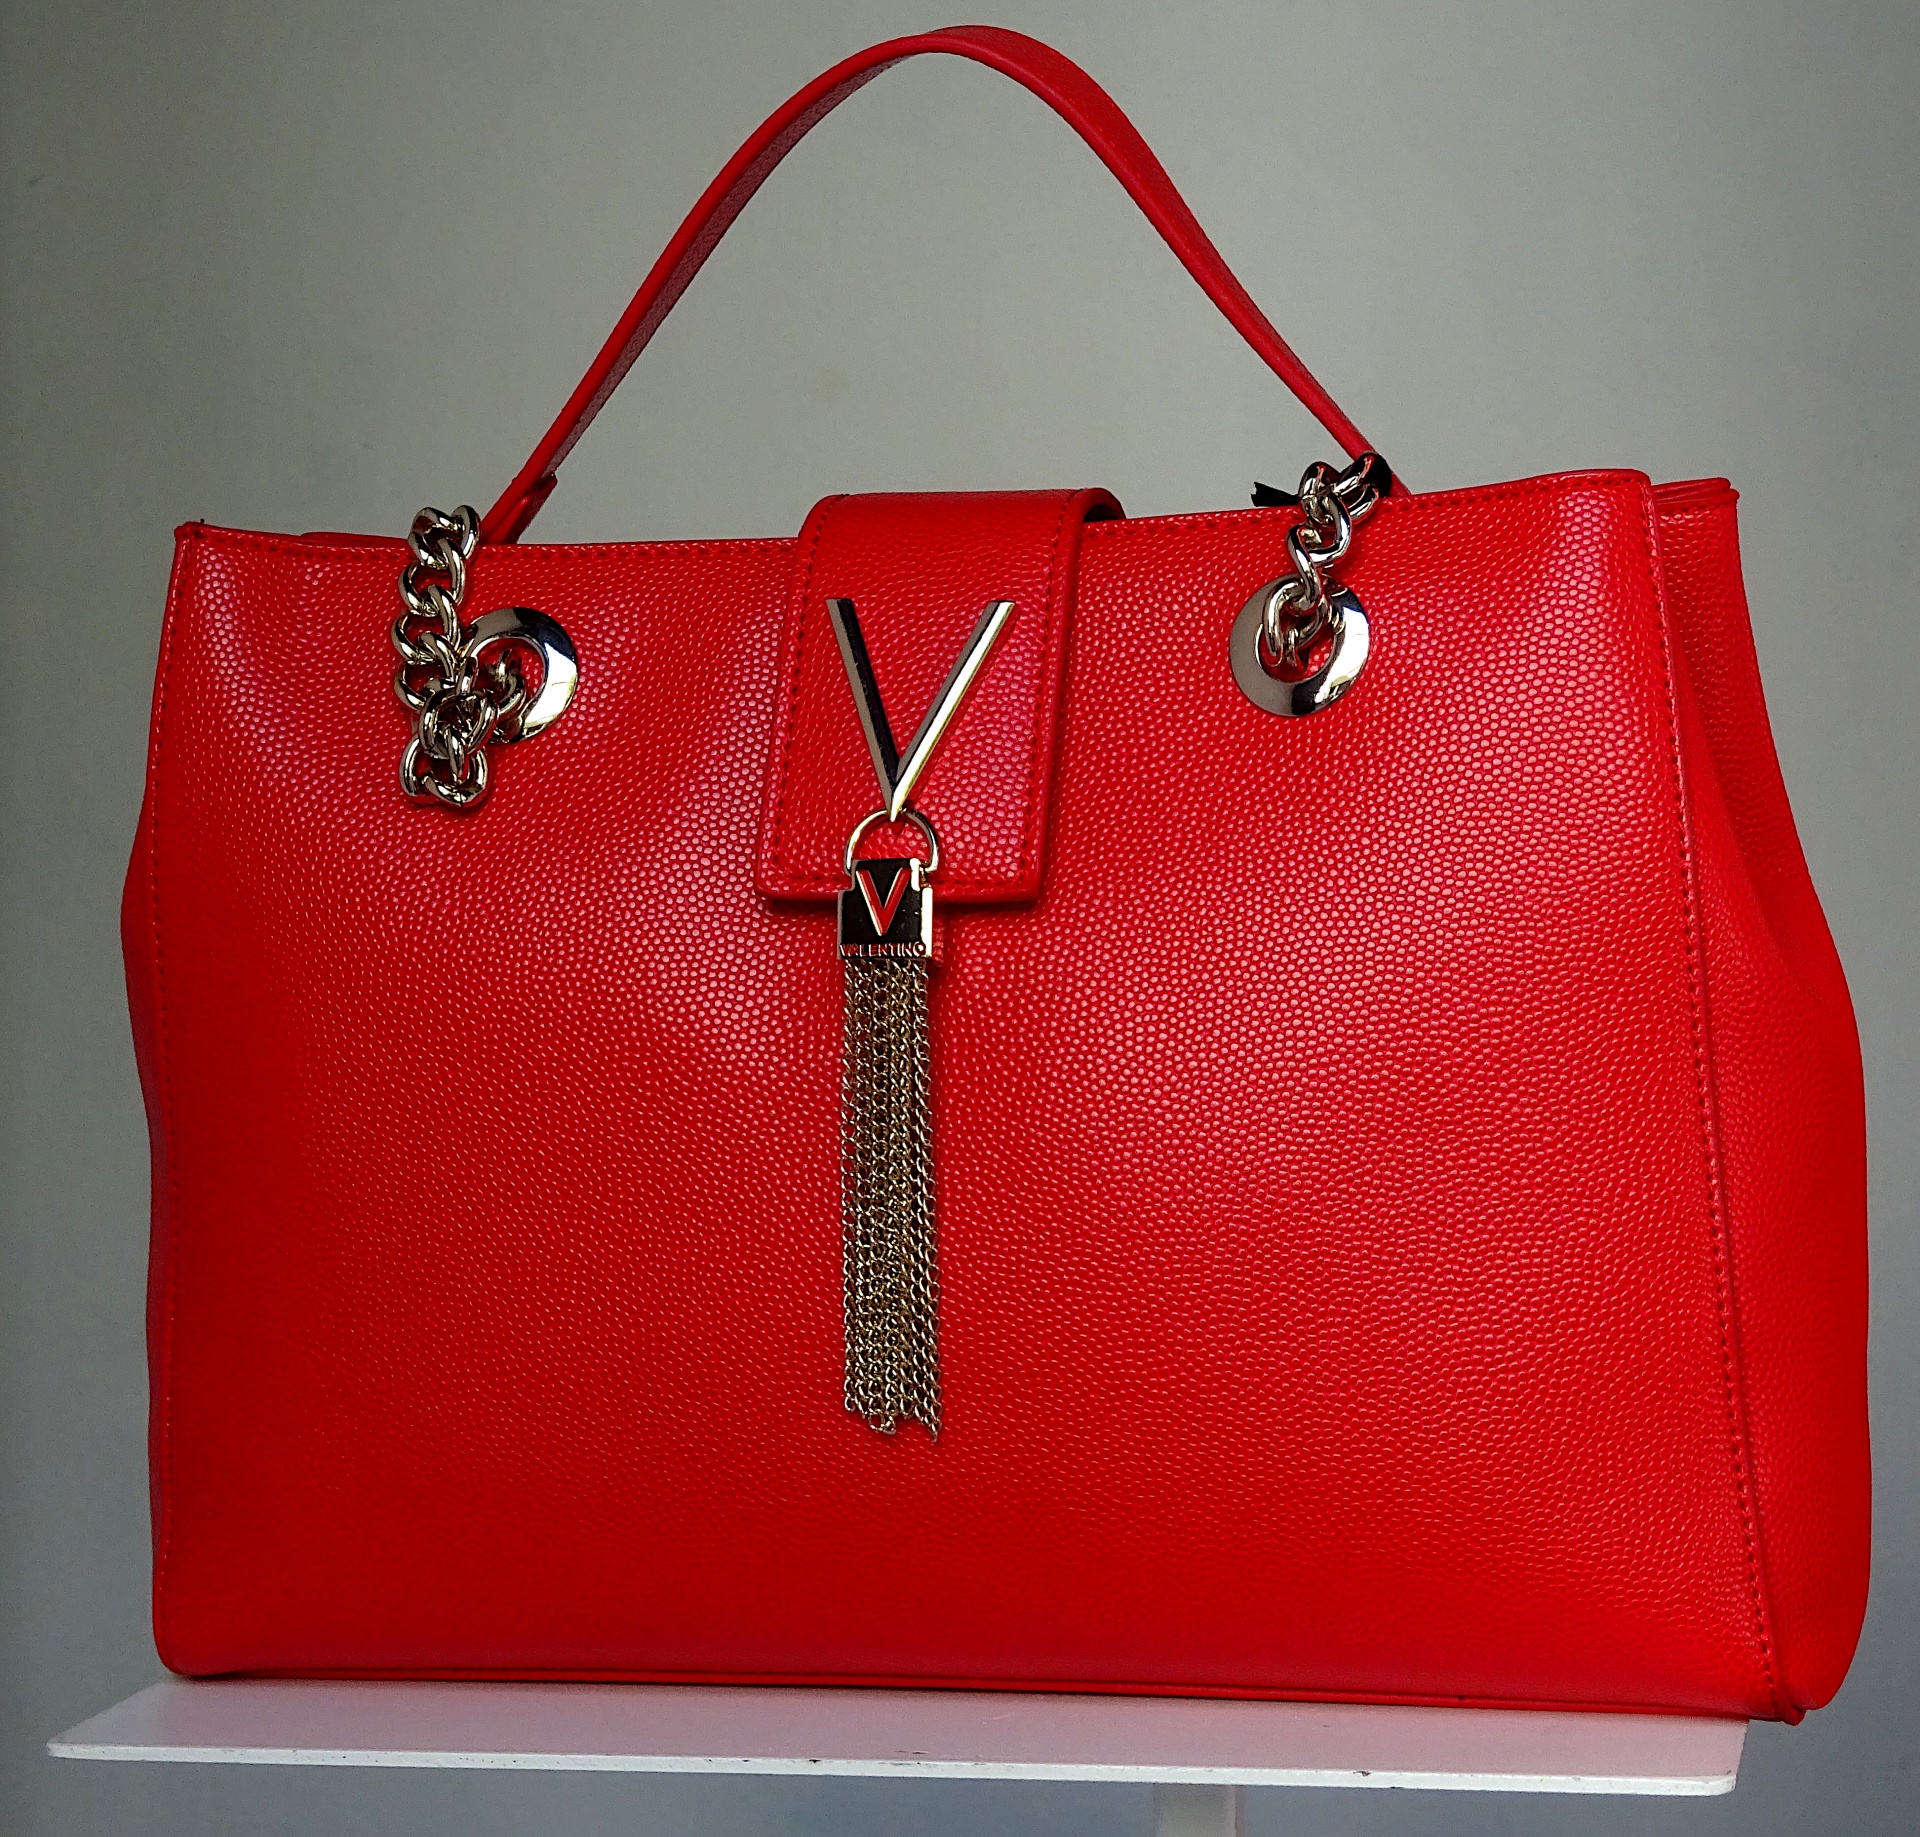 Ladies Red Handbag